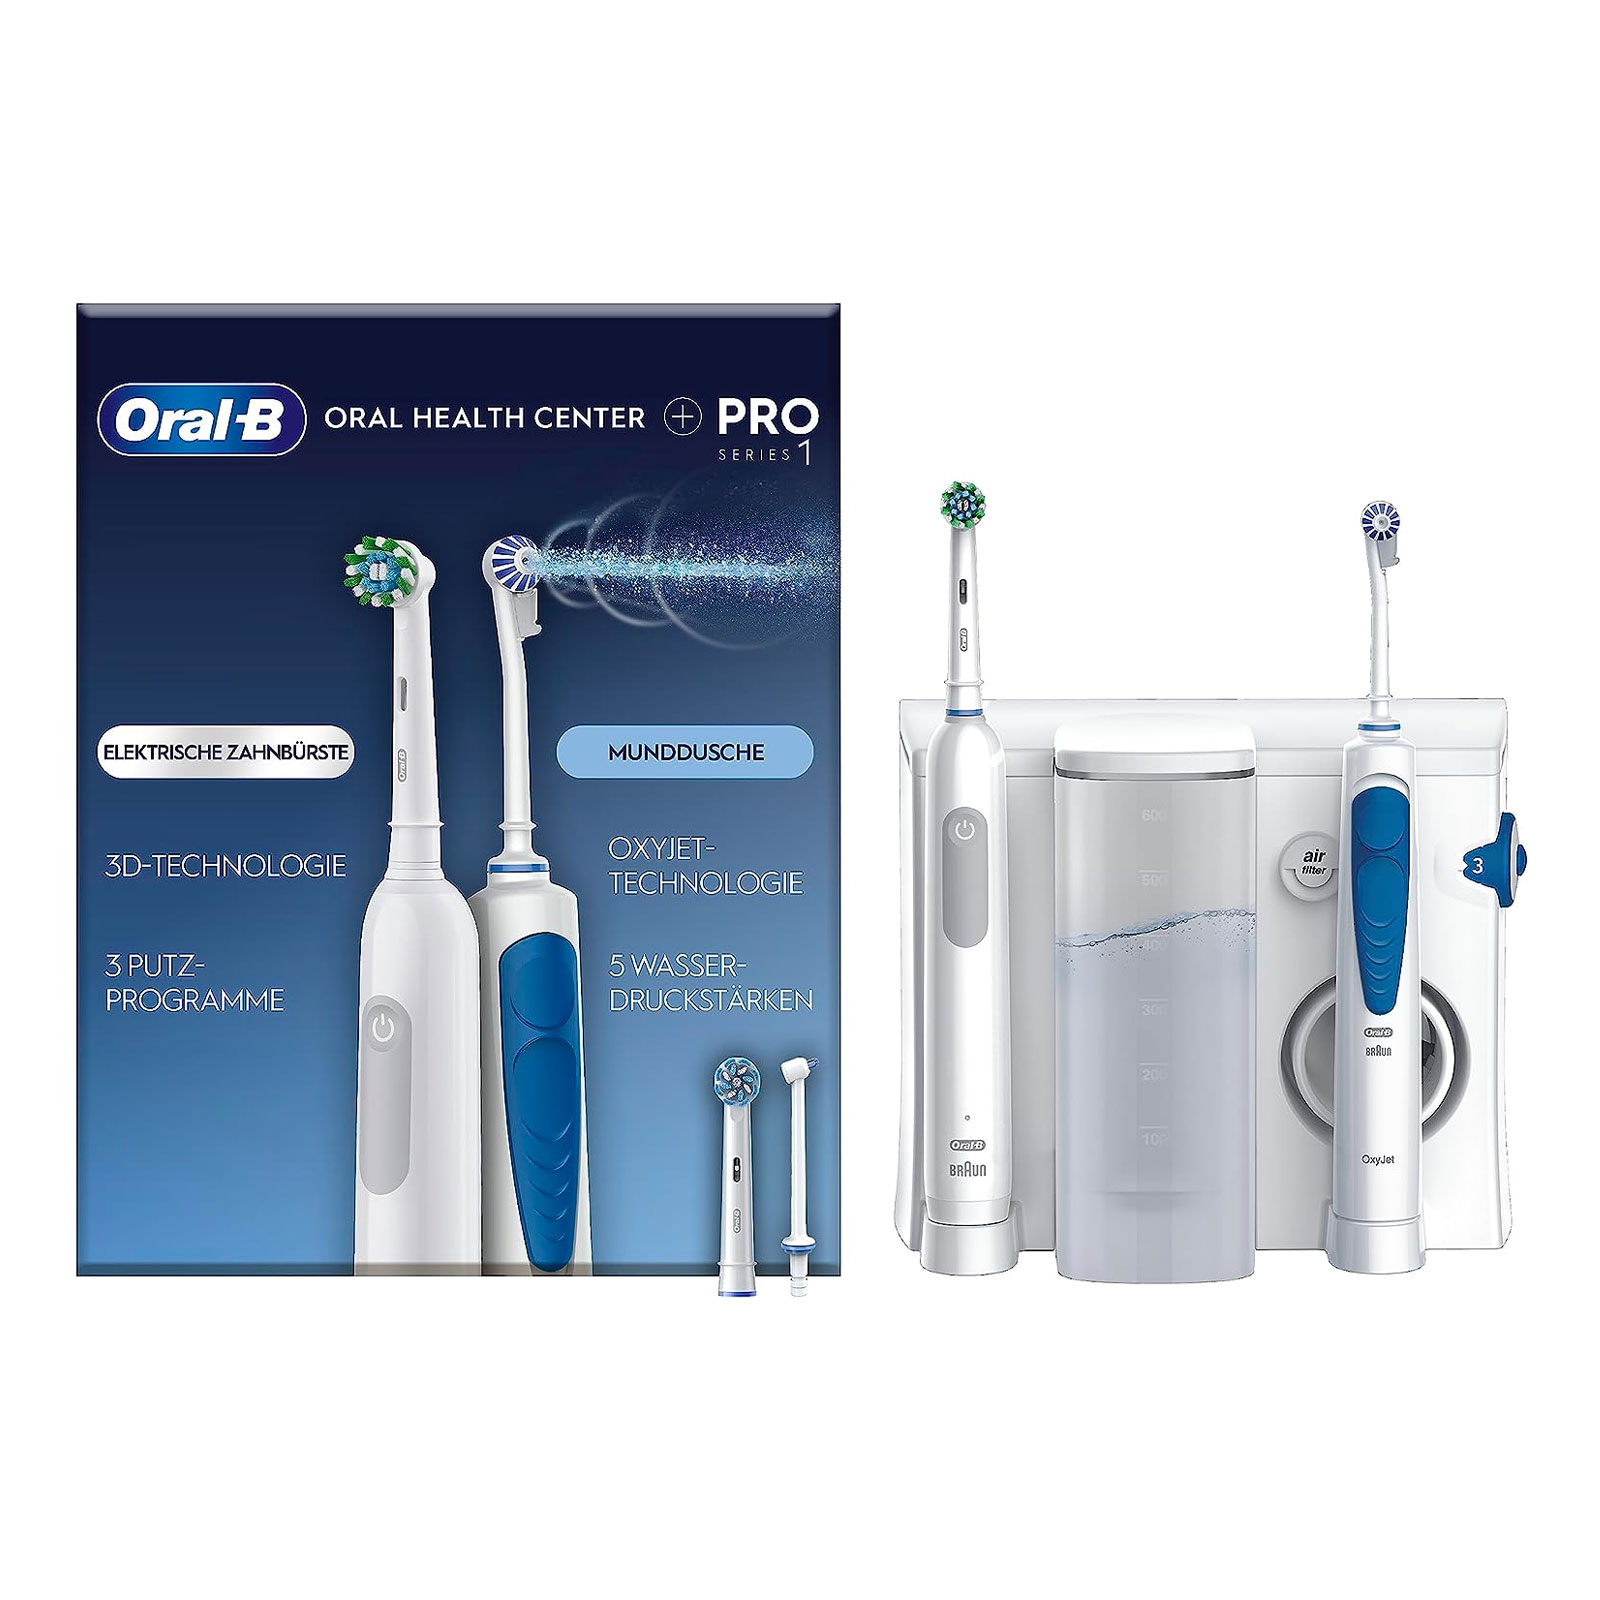 Oral-B Zahnpflegesystem Oral Health Center Oxyjet + PRO Series 1